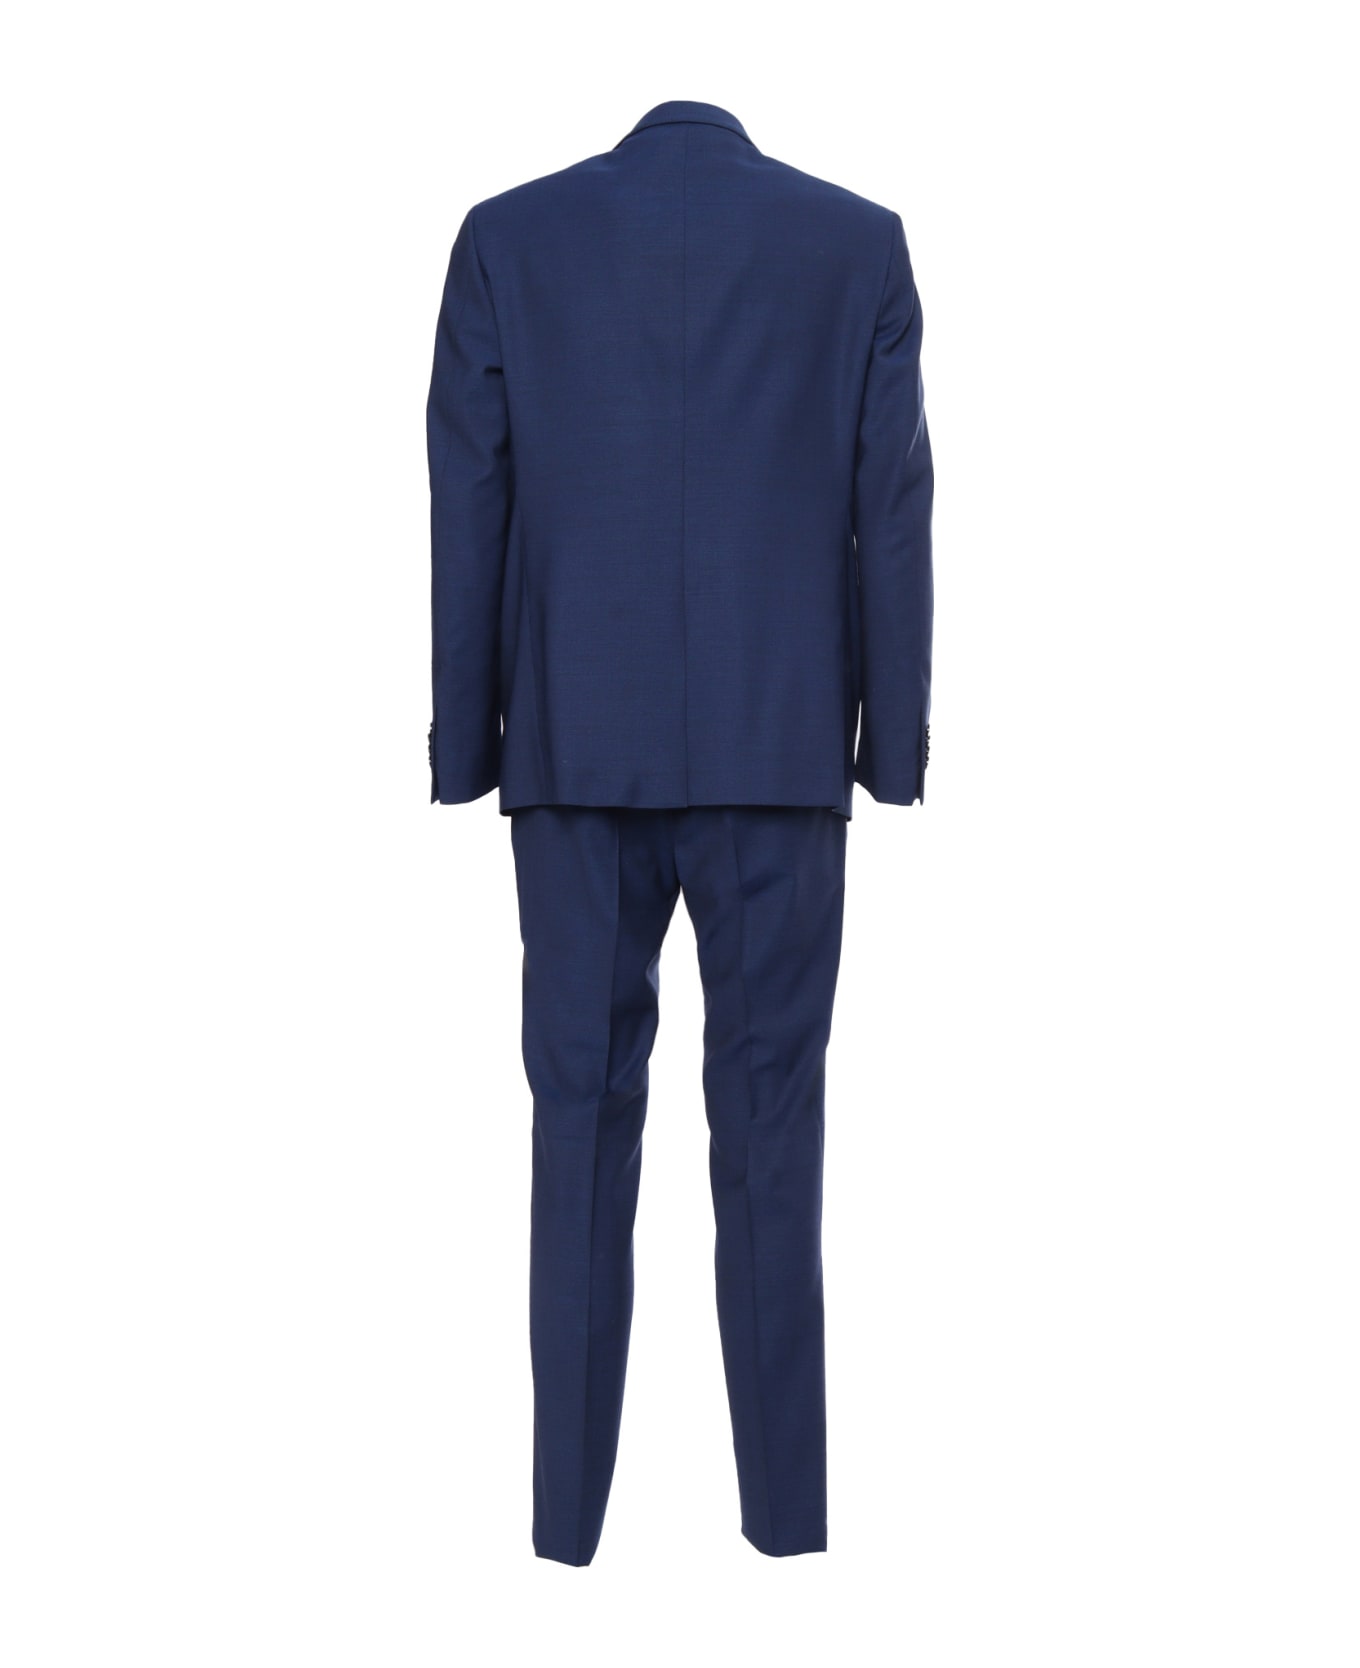 Luigi Bianchi Mantova Bright Blue Suit - BLUE スーツ